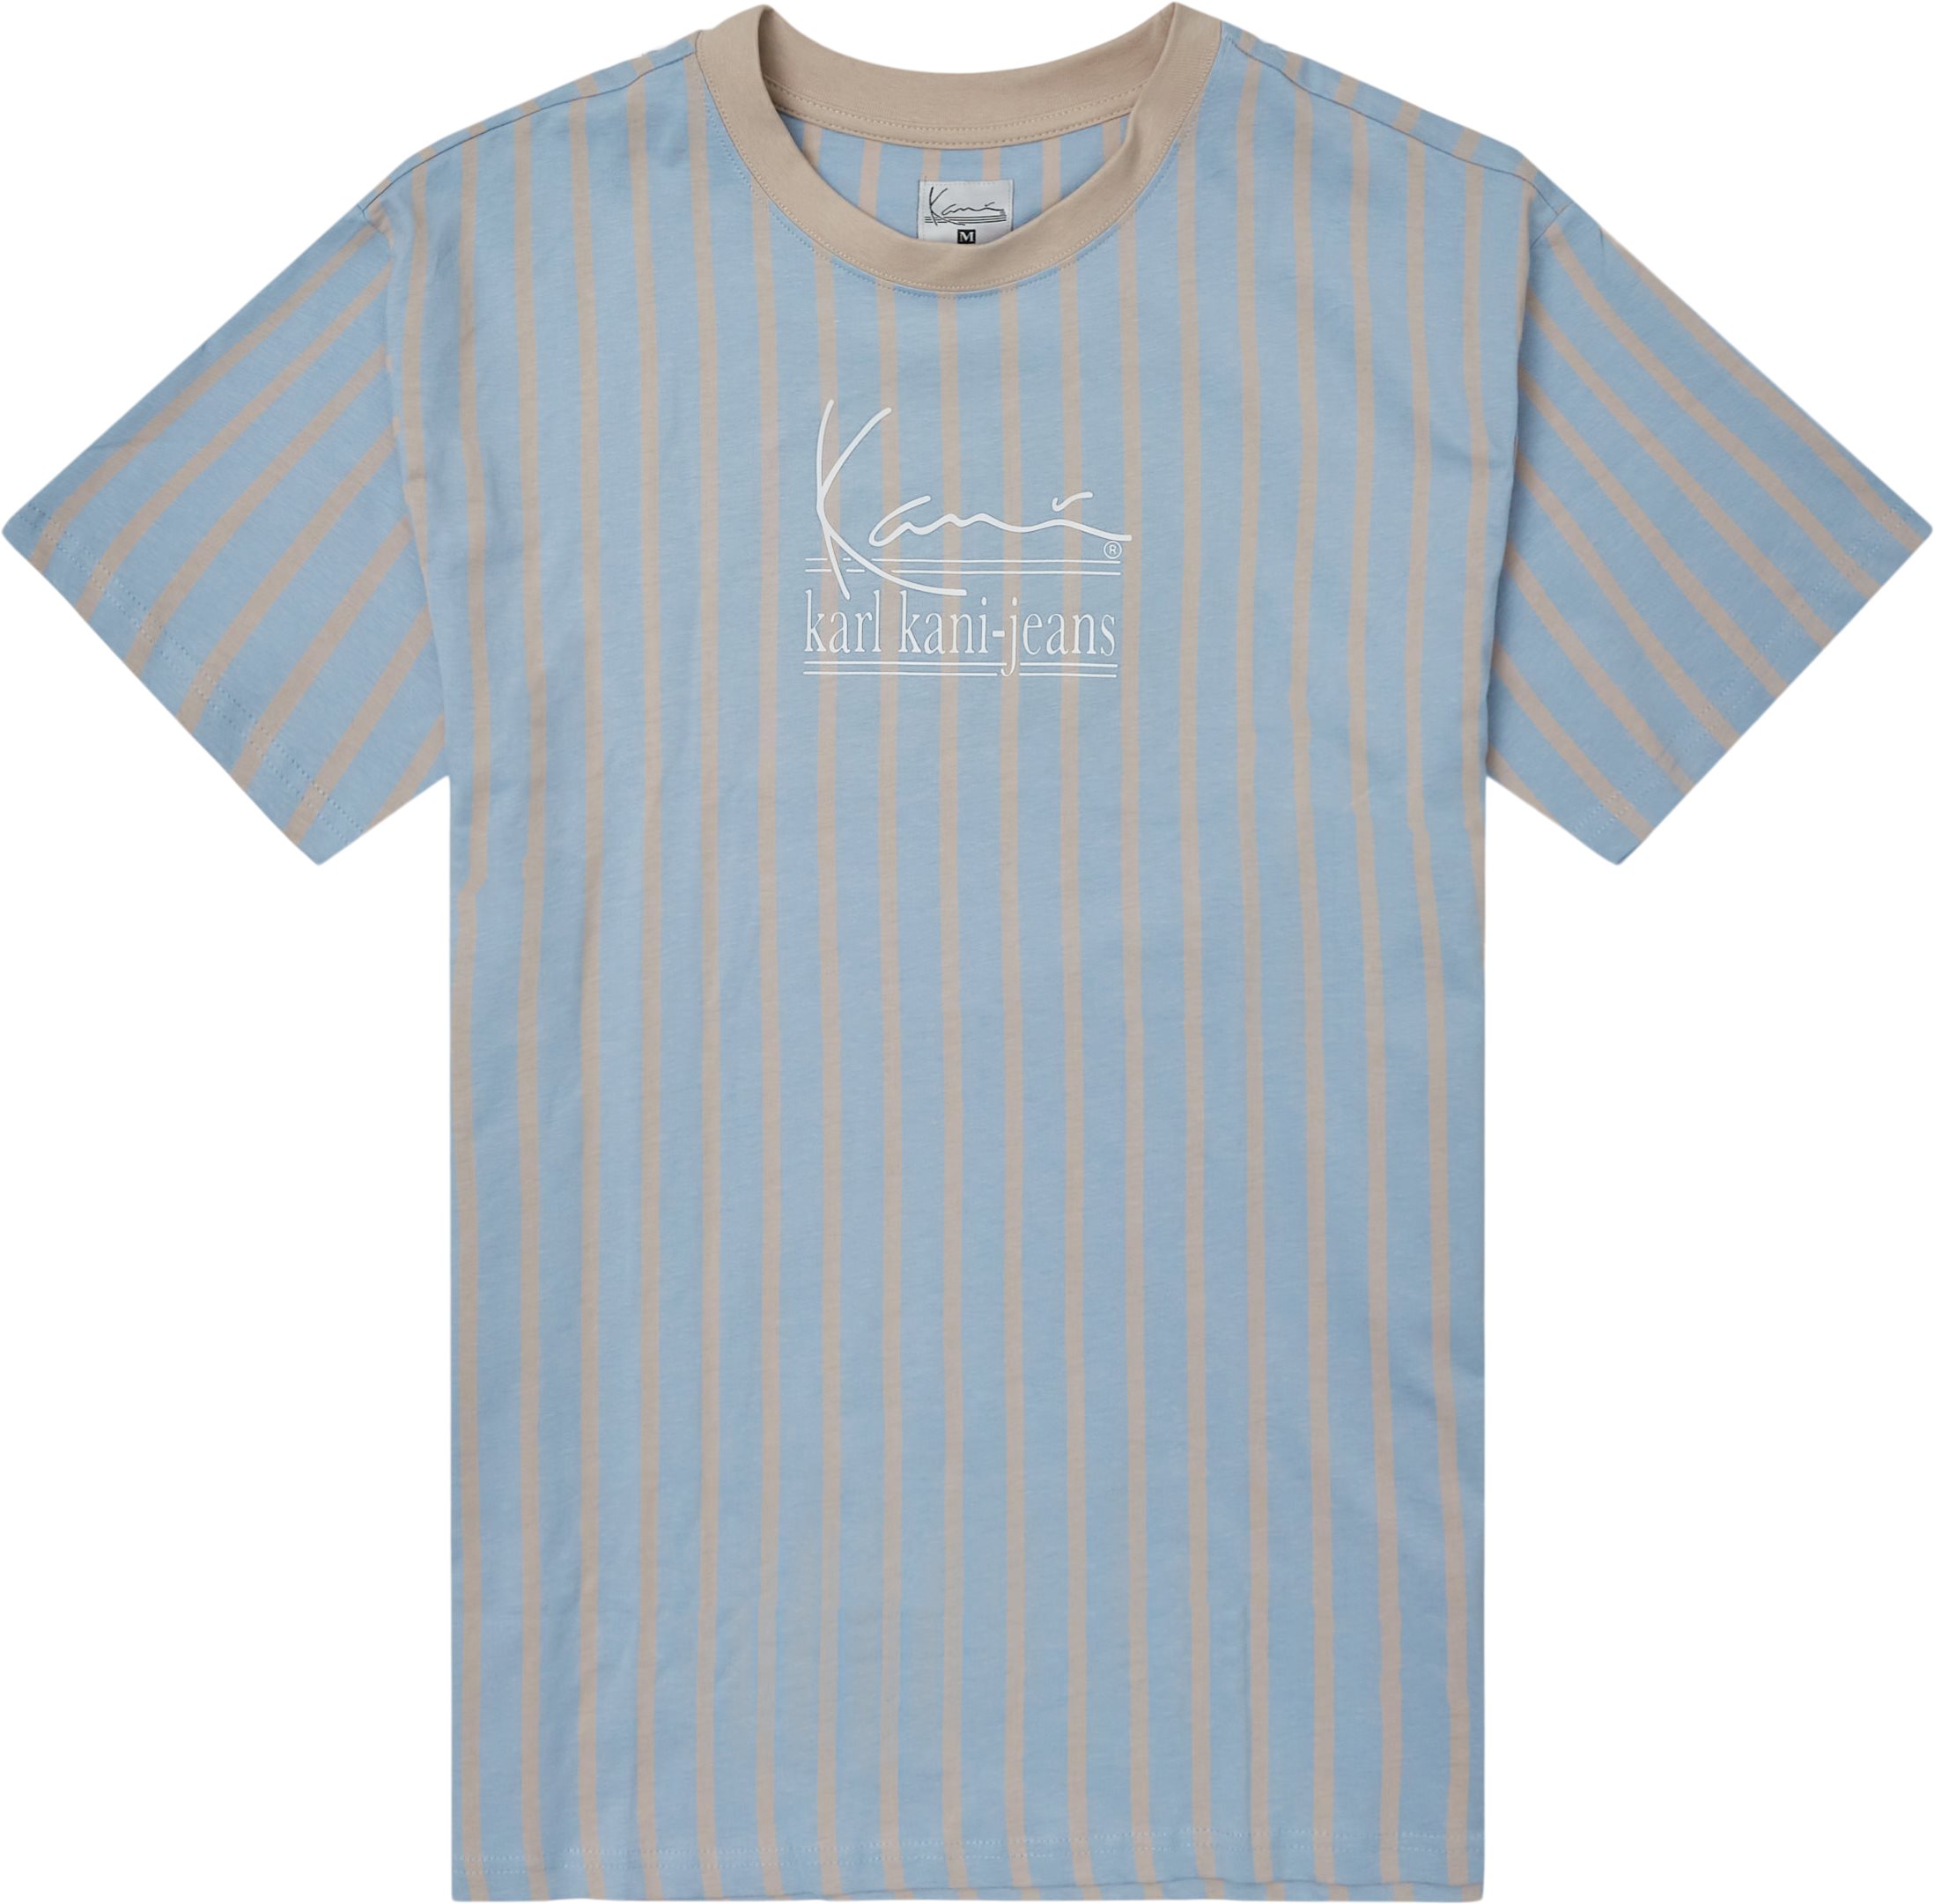 Signature Kkj Pinstripe Tee - T-shirts - Regular fit - Blå